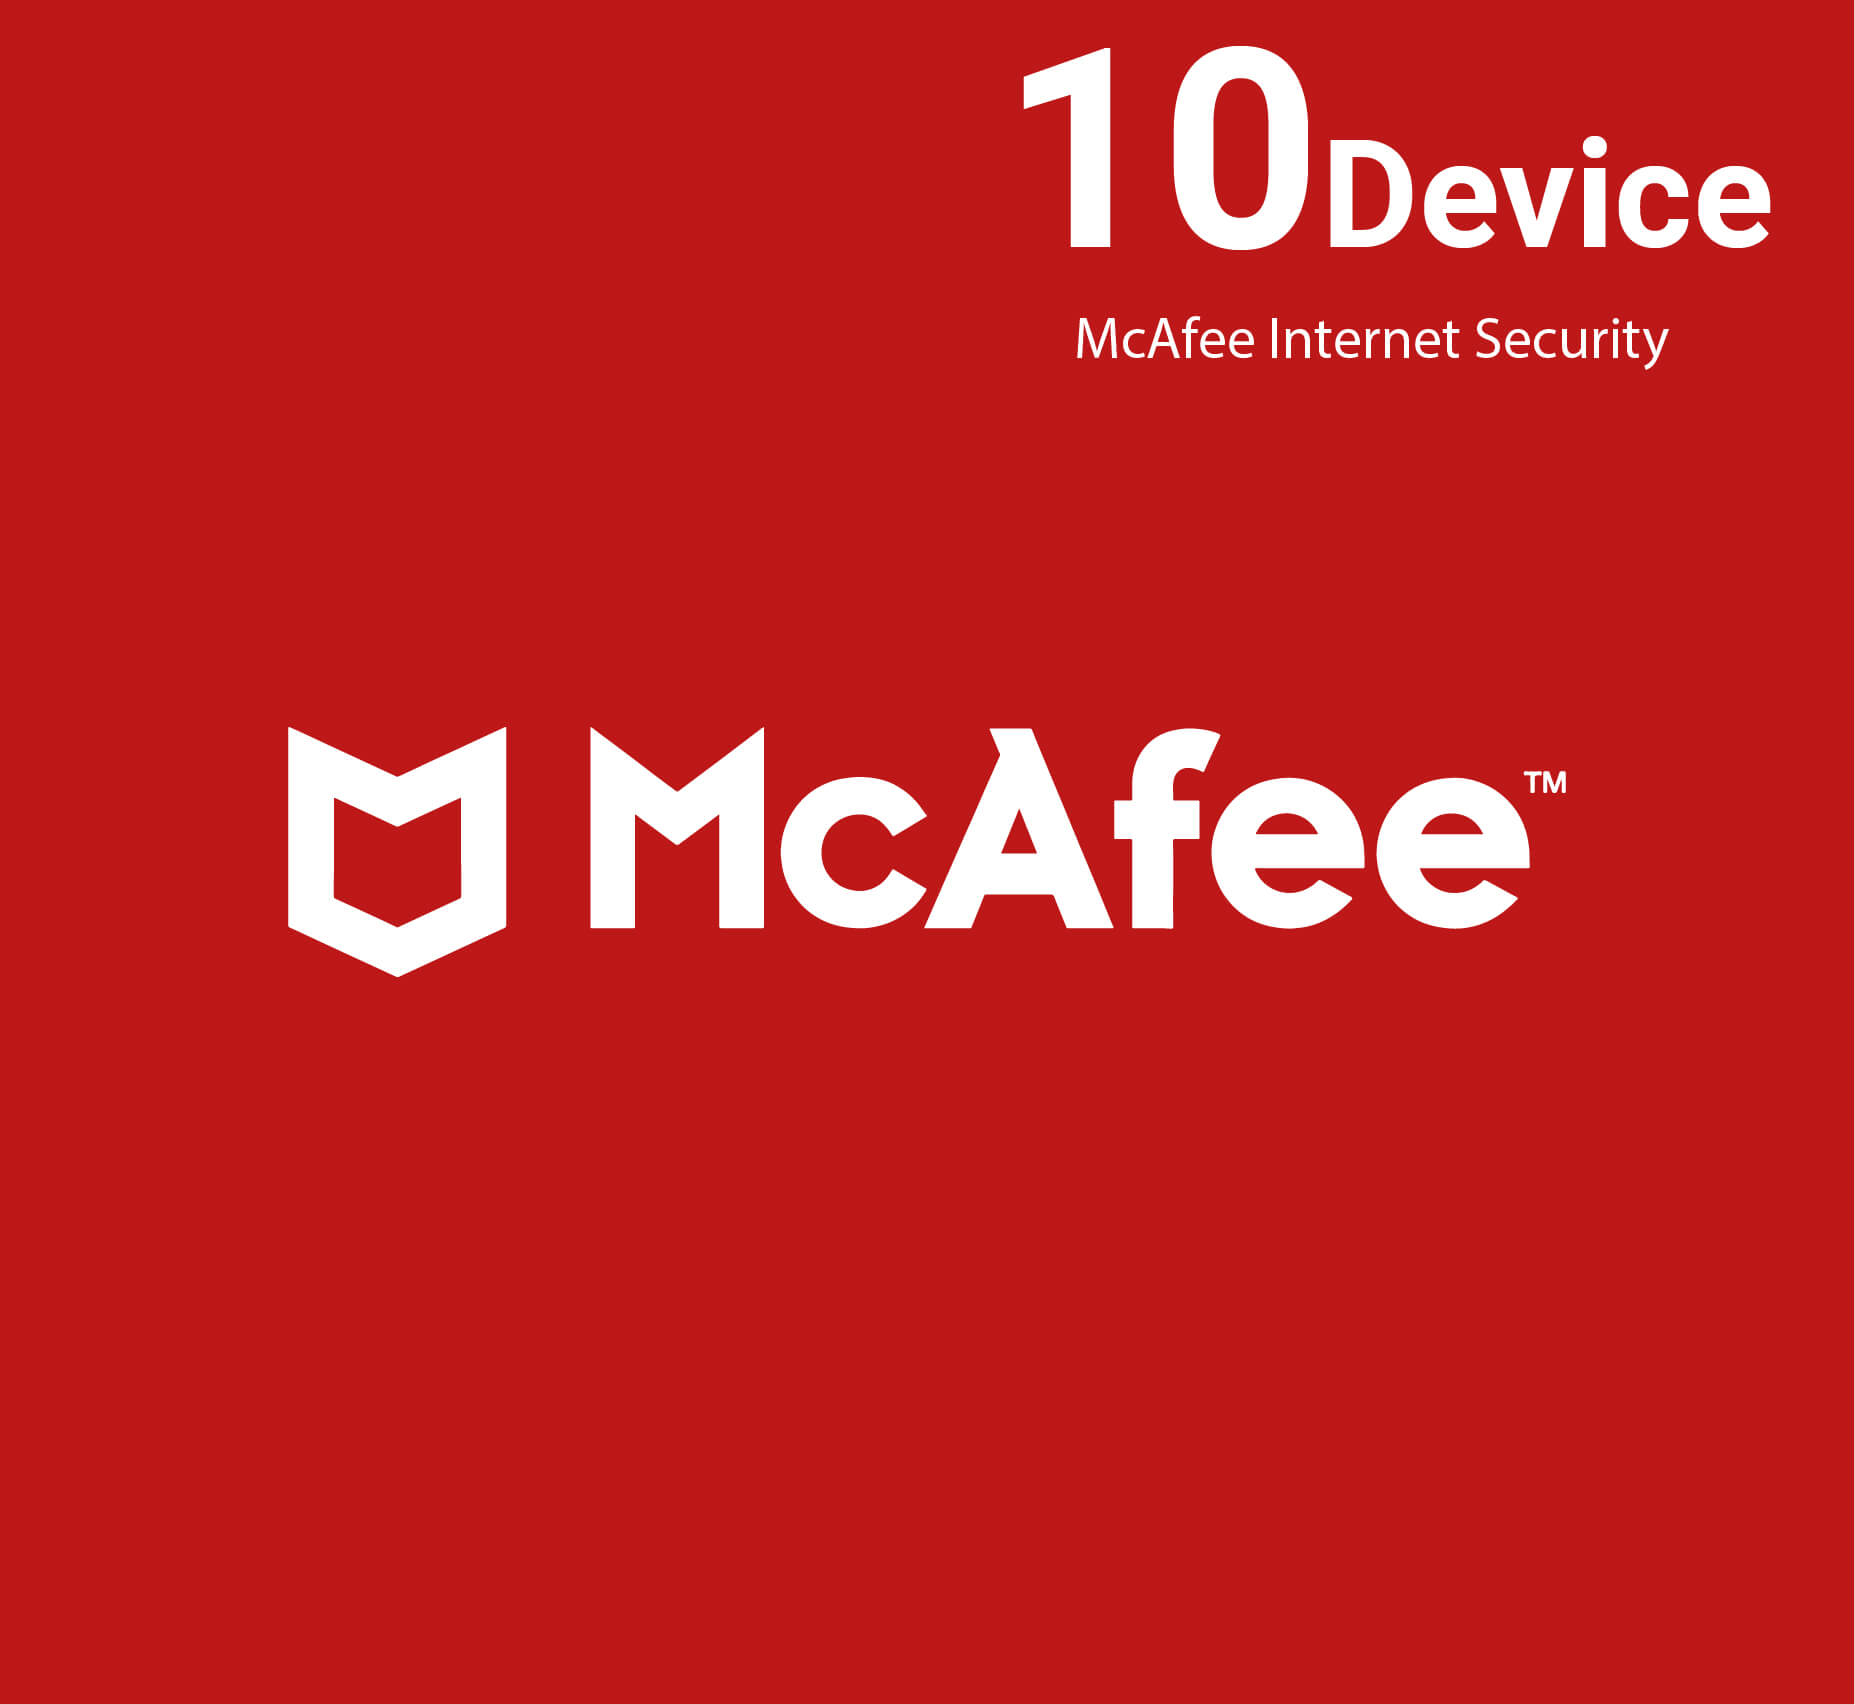 McAfee Internet Security 10 Device